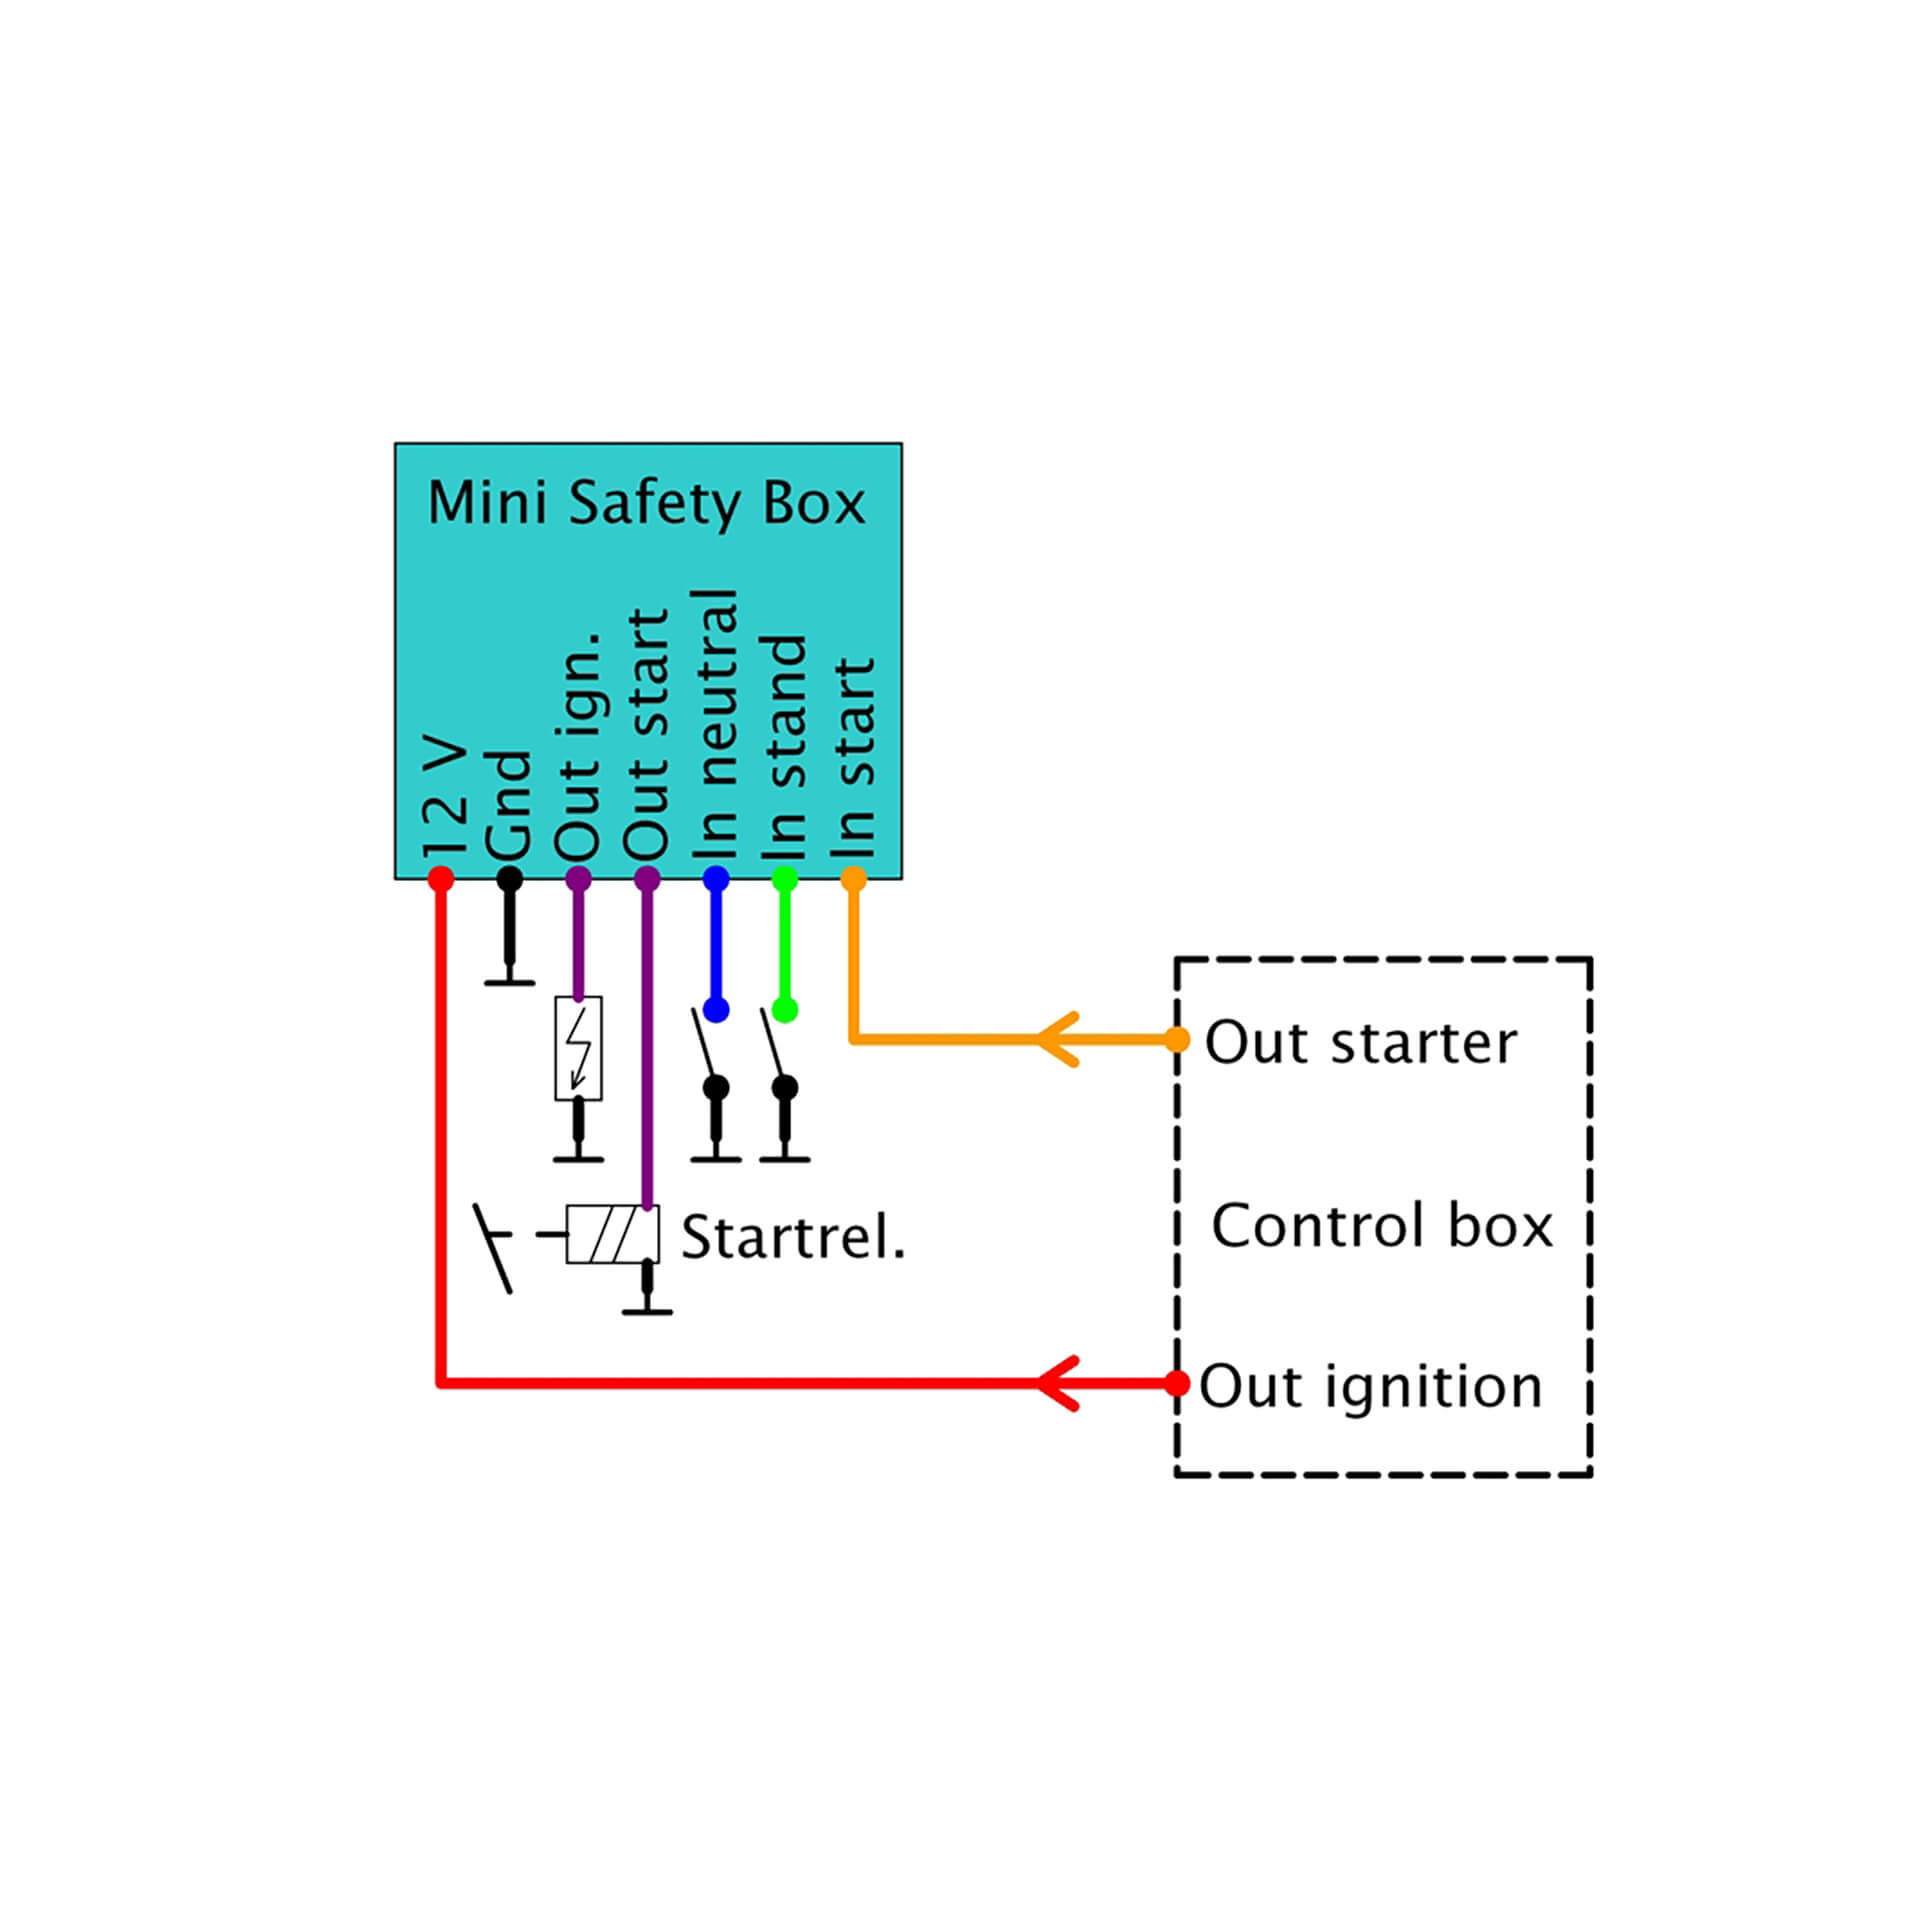 axel_joost mini safety box